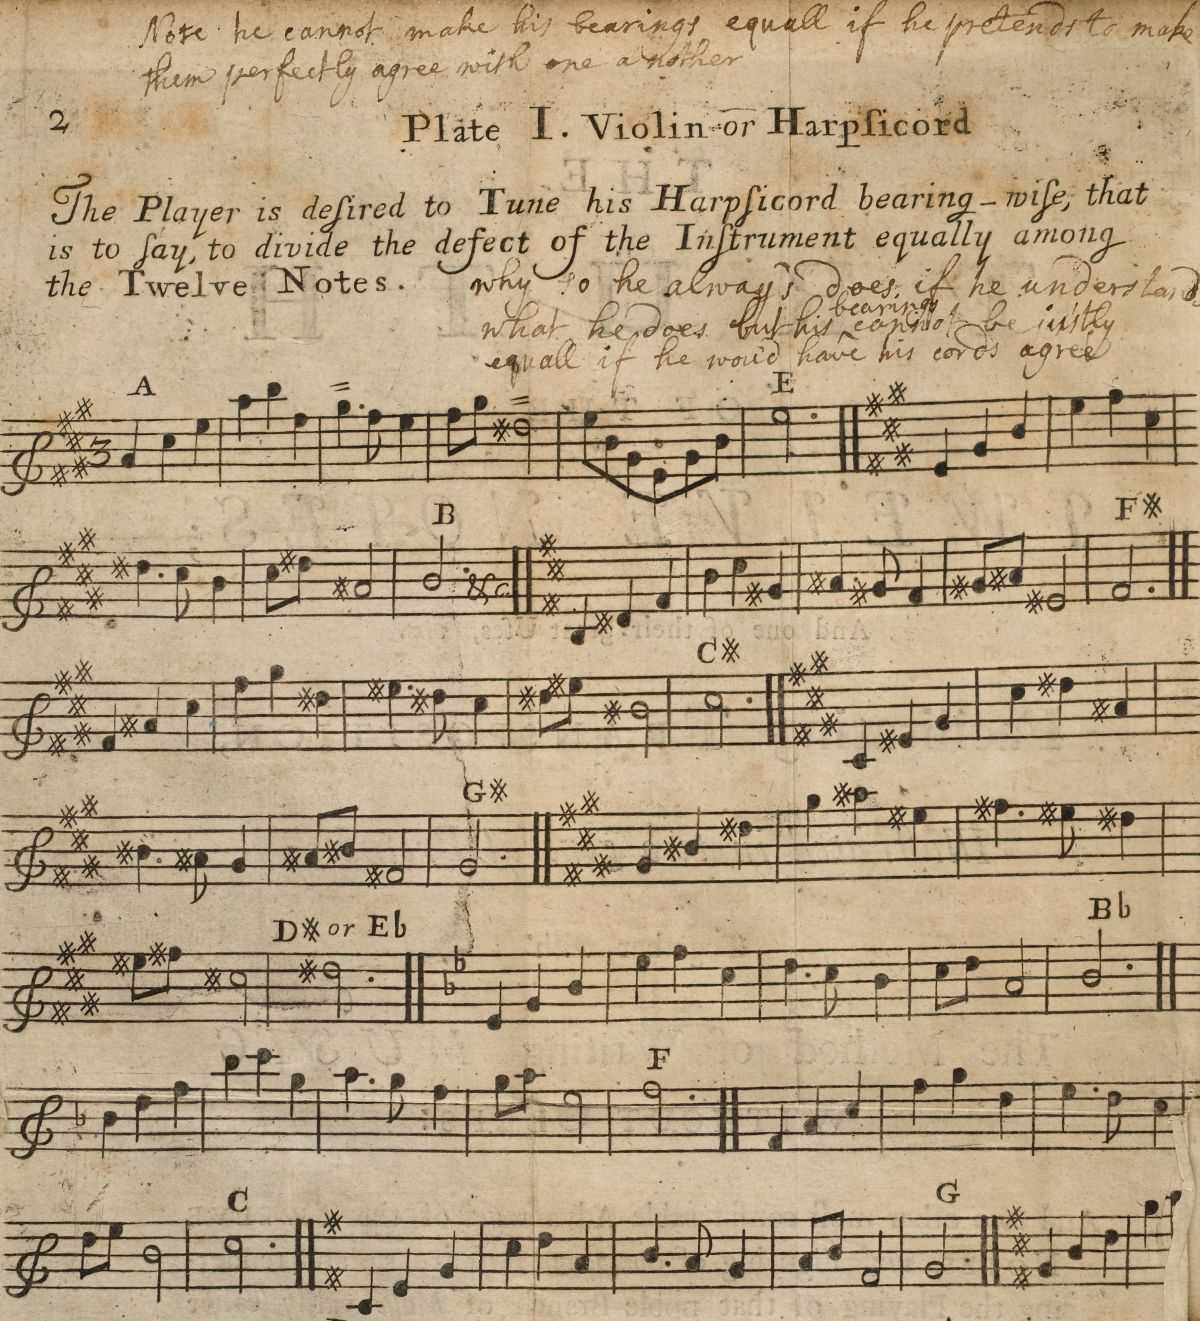 Lot 155 - De La Fond (John Francis). A New System of Music, 1st edition, 1725